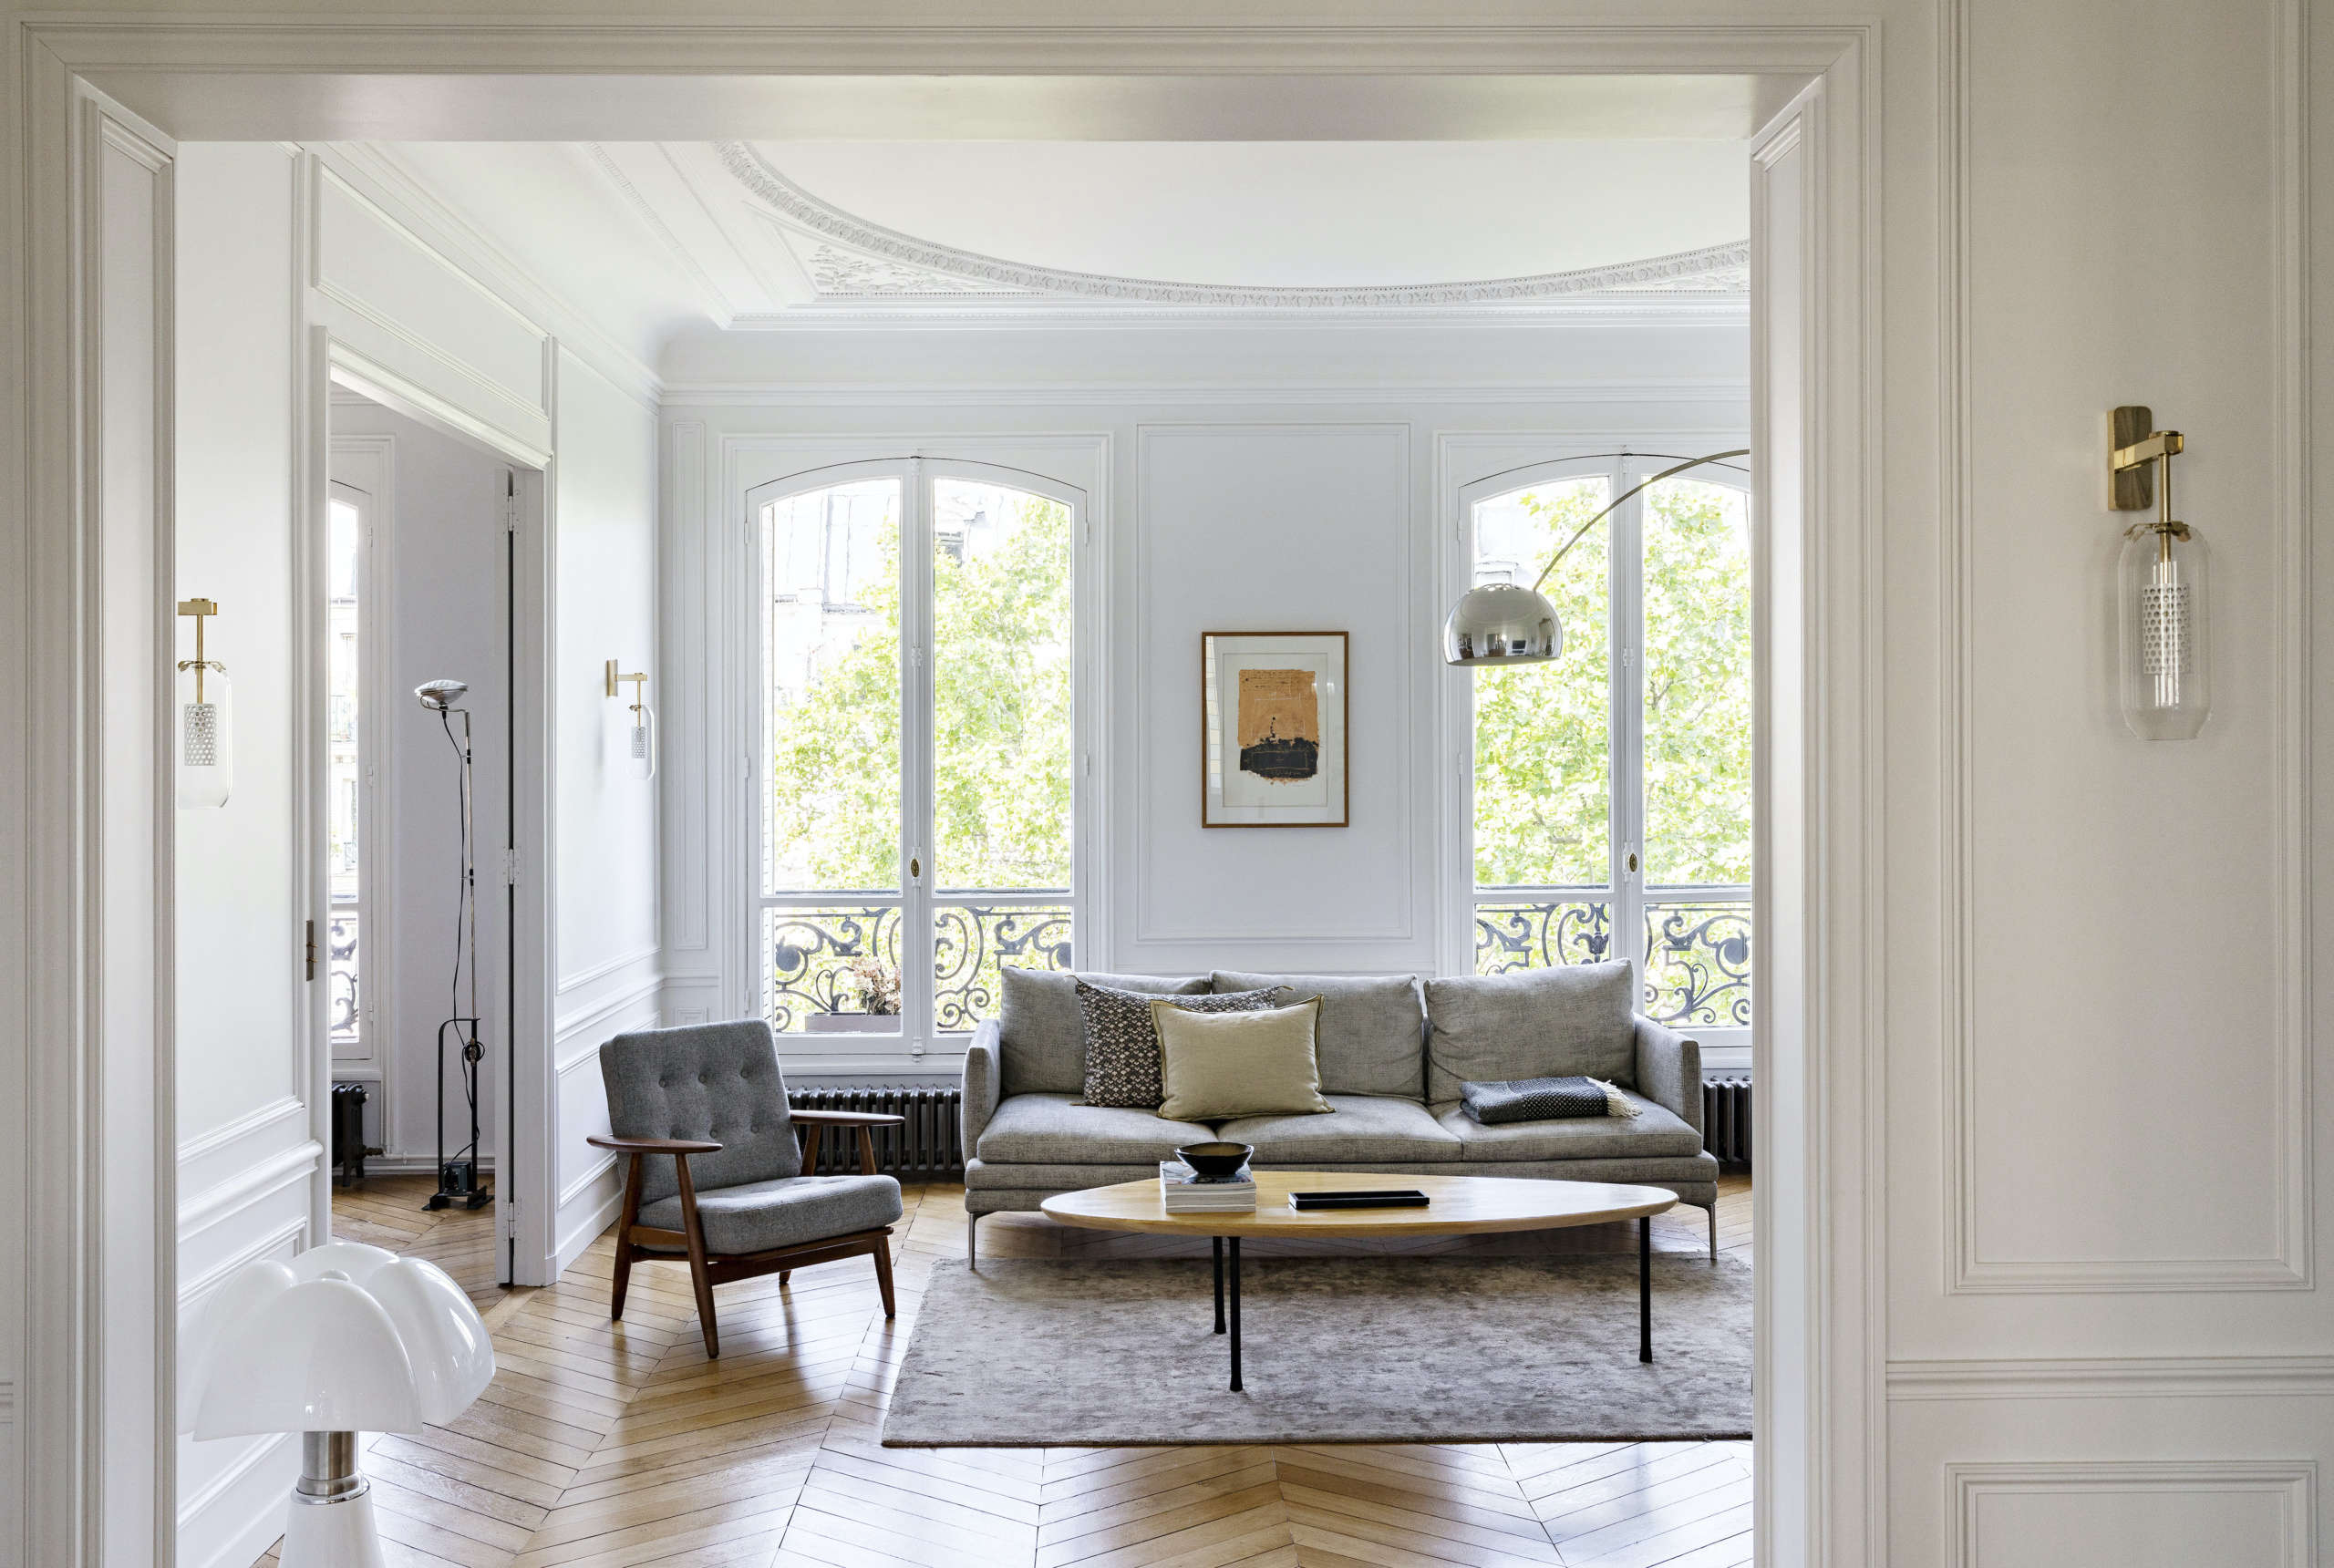 neutral tones, parisian oak flooring, and haussmanian architectural details mak 9